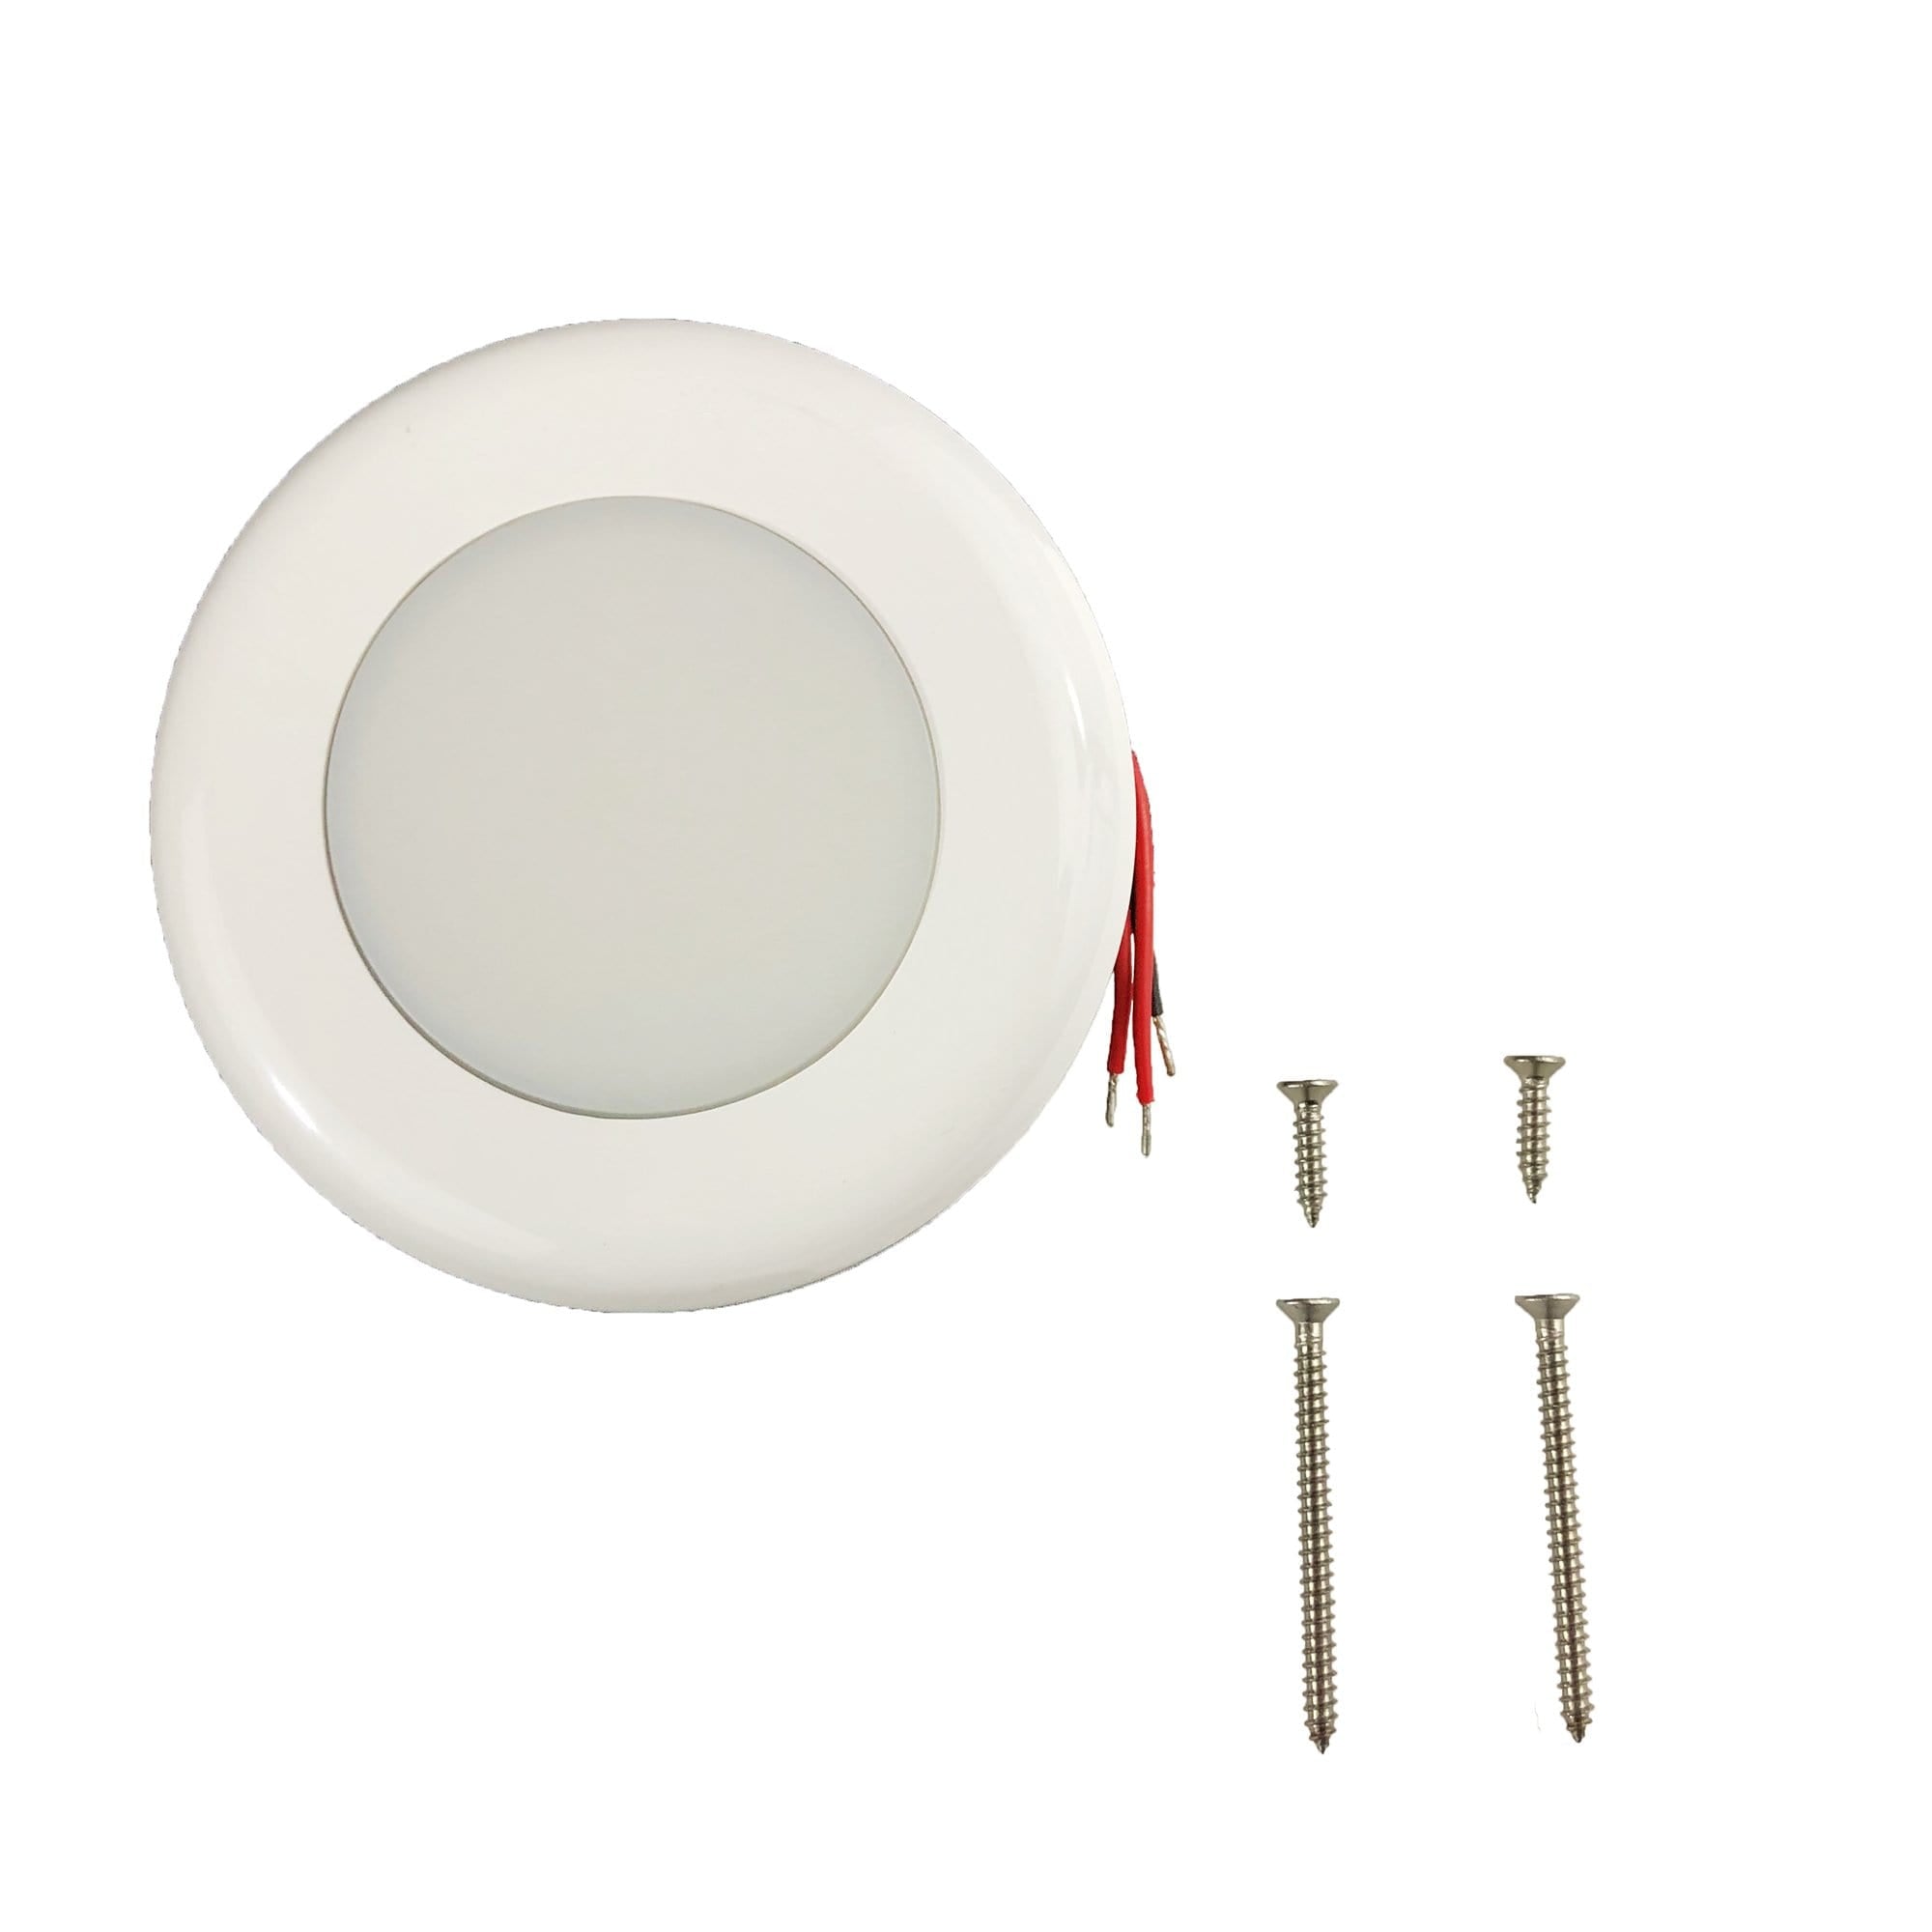 Scandvik 41385P A3 - LED Ceiling Lights Dual Color Warm White/Red Flush Mount, White Trim